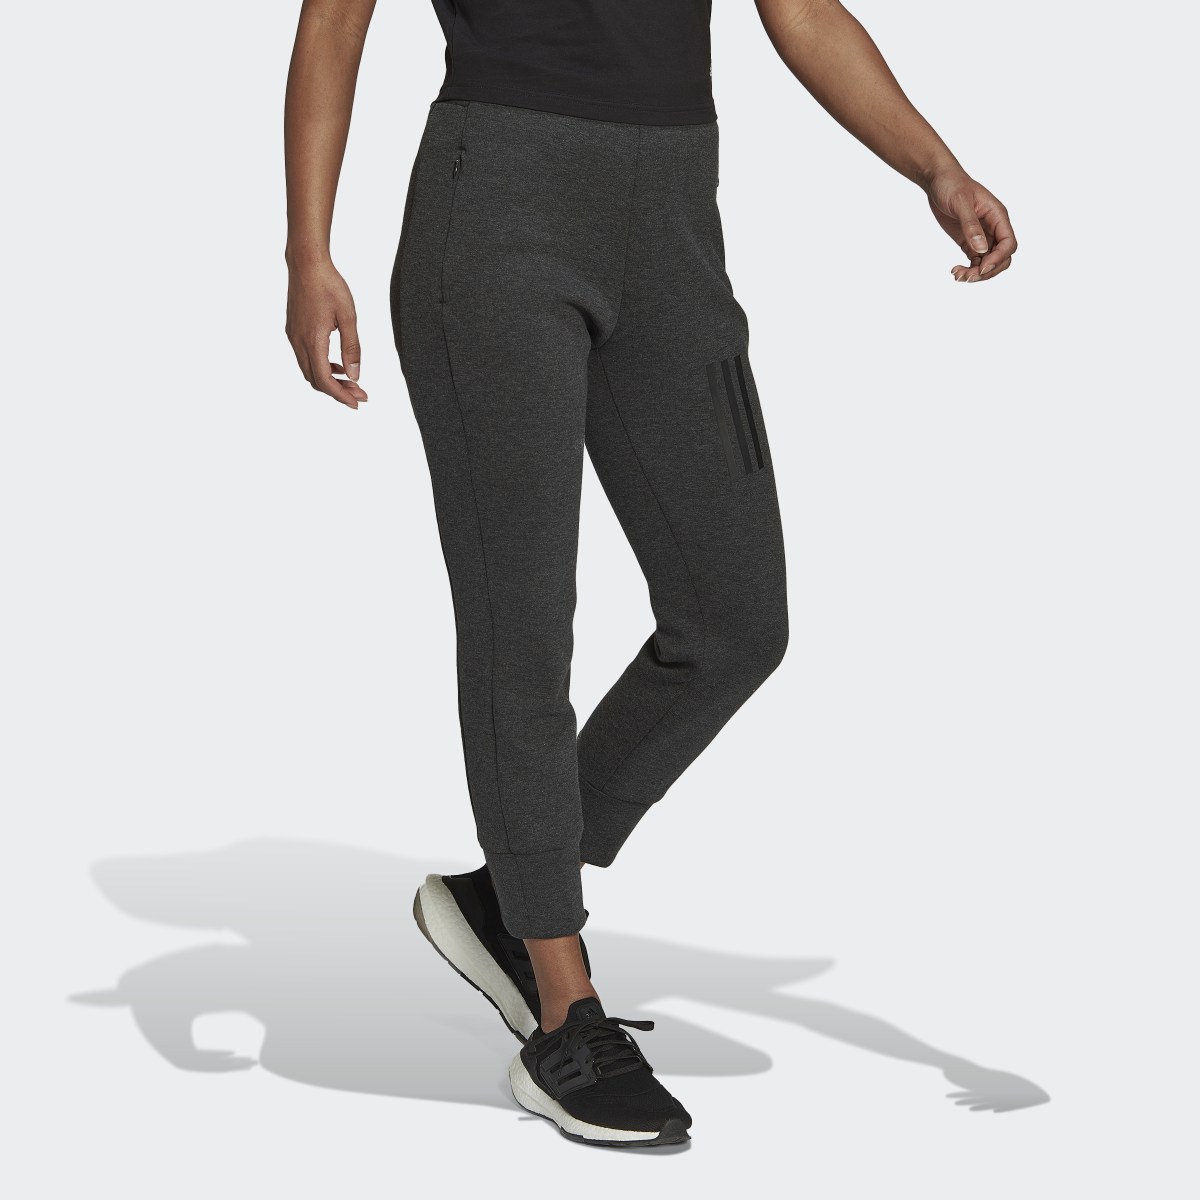 Adidas Mission Victory Slim-Fit High-Waist Pants. 4